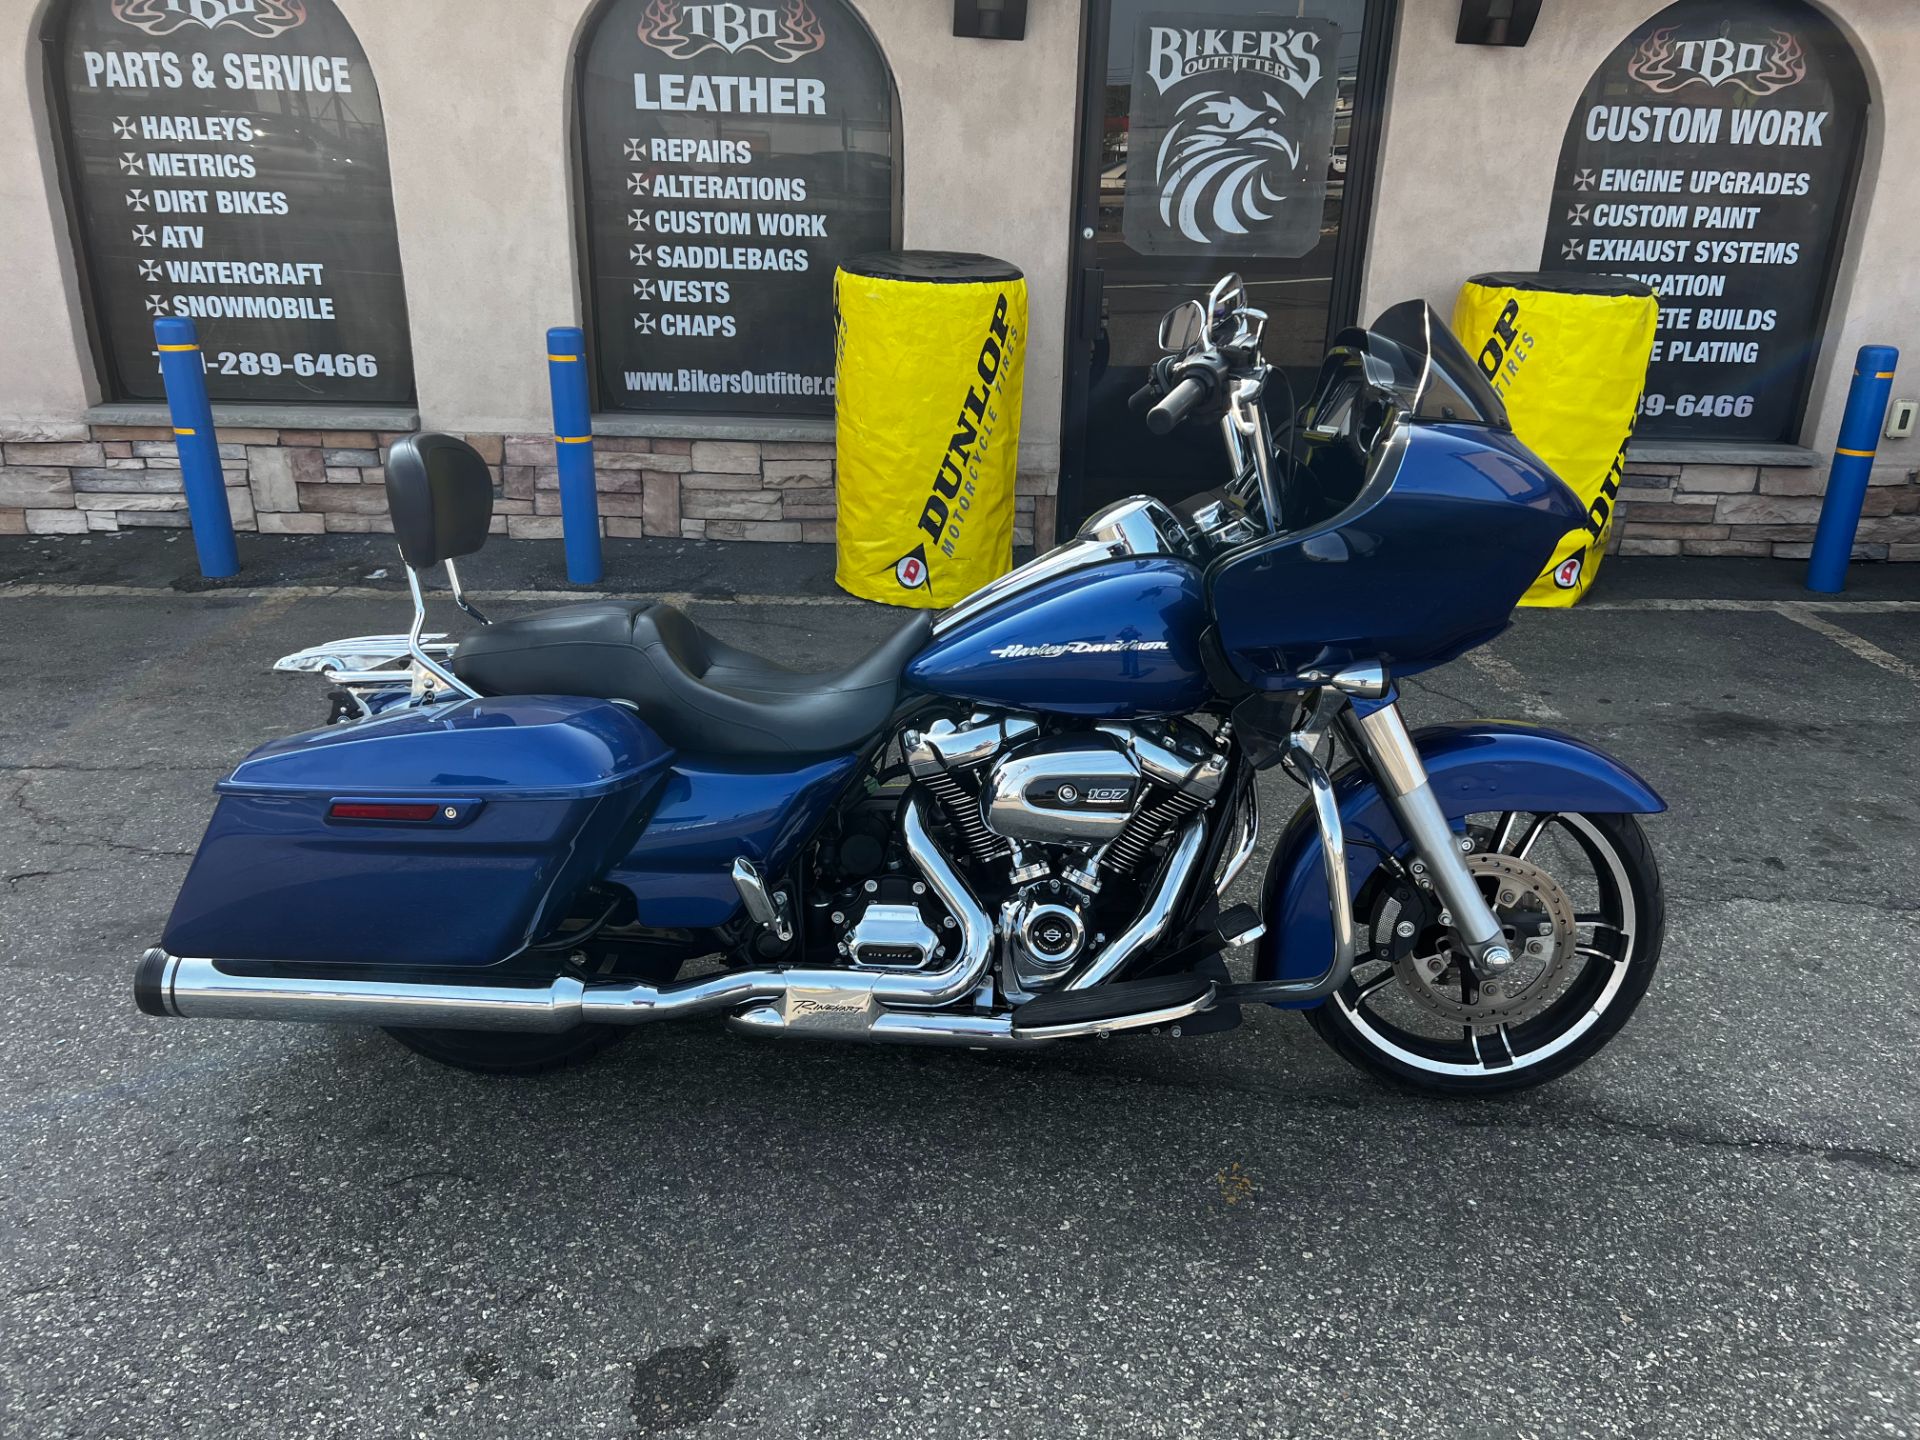 2017 Harley Davidson Roadglide Special in Revere, Massachusetts - Photo 1